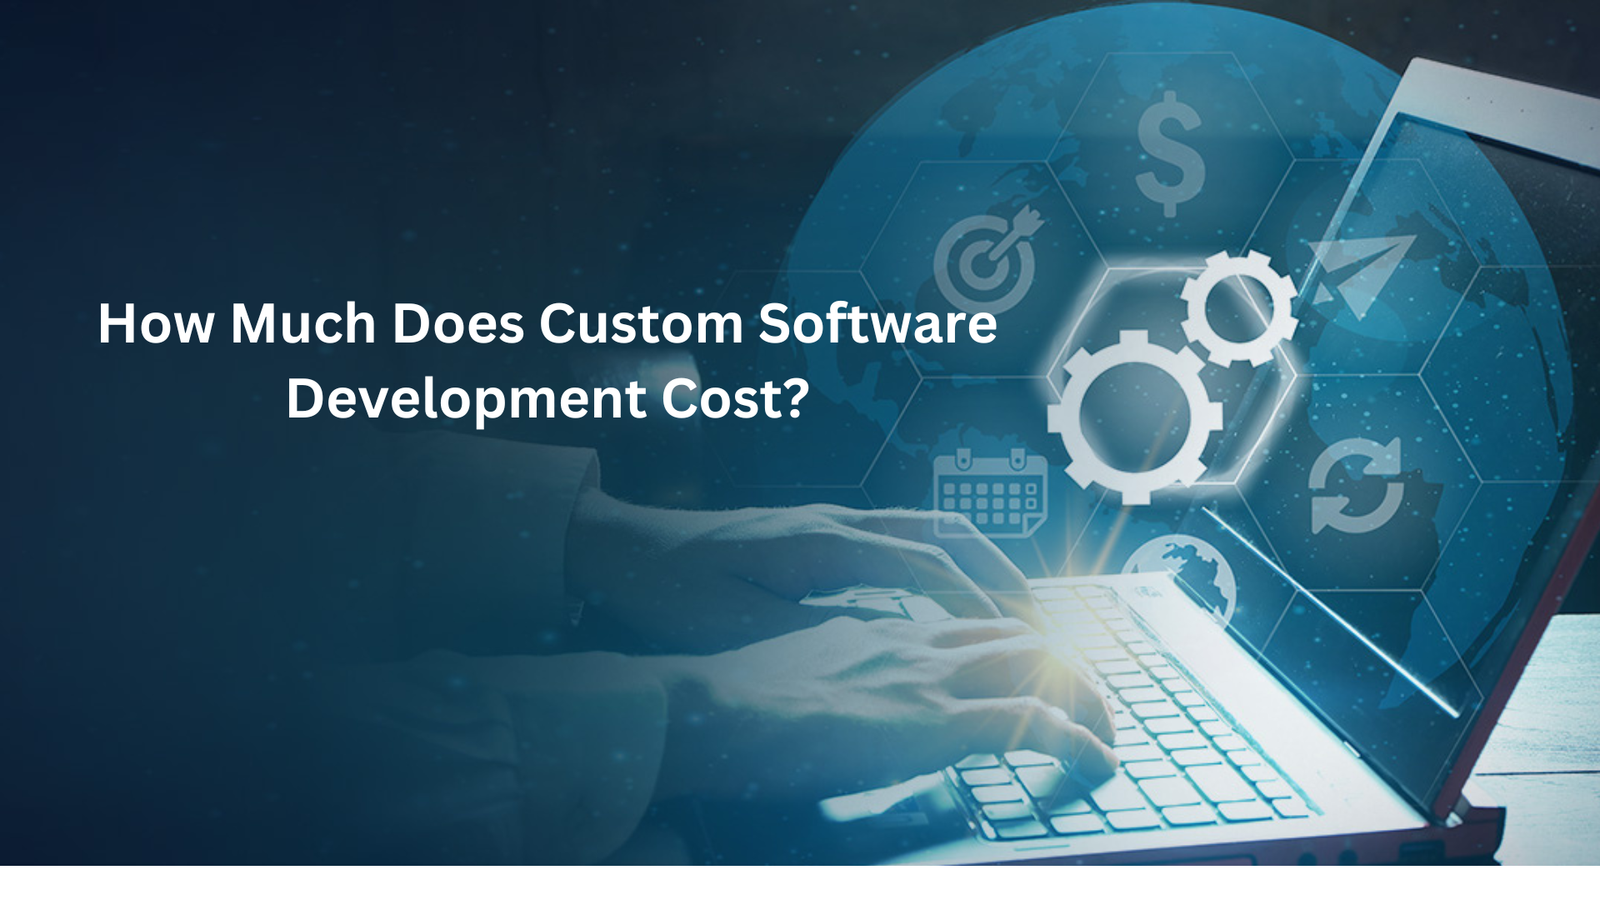 Custom software development cost